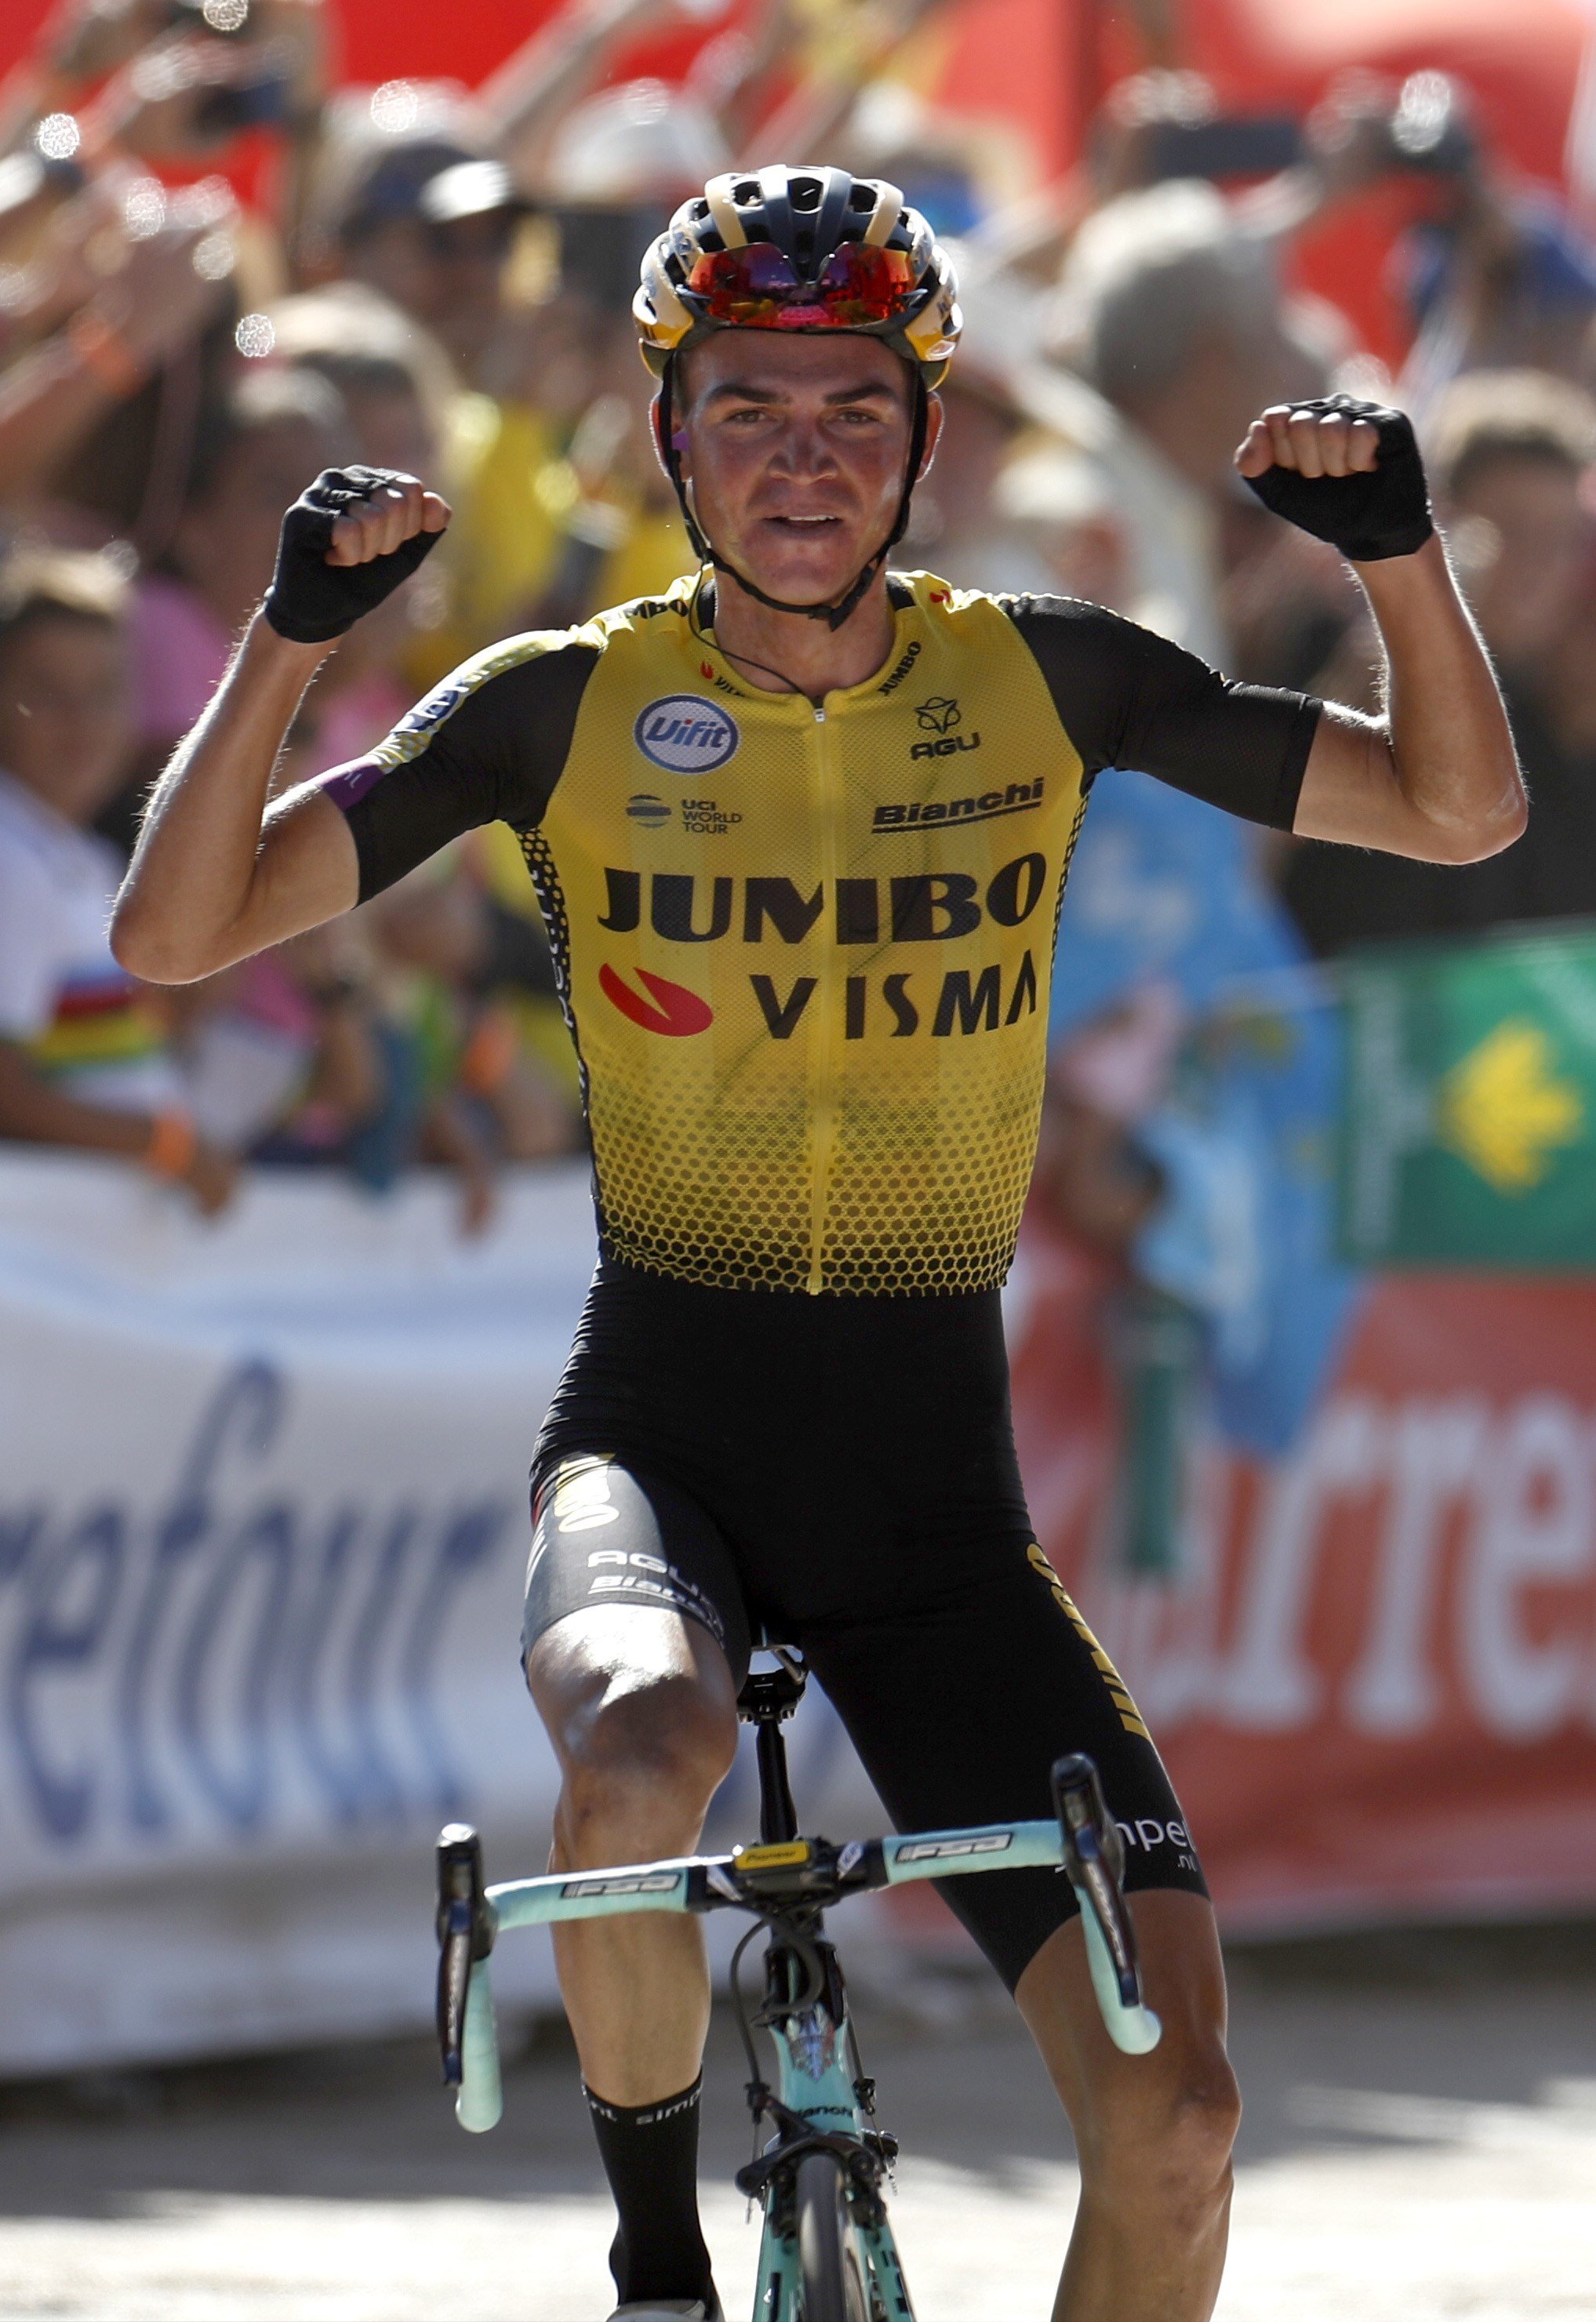 Kuss gana la decimoquinta etapa de la Vuelta y Roglic sigue líder